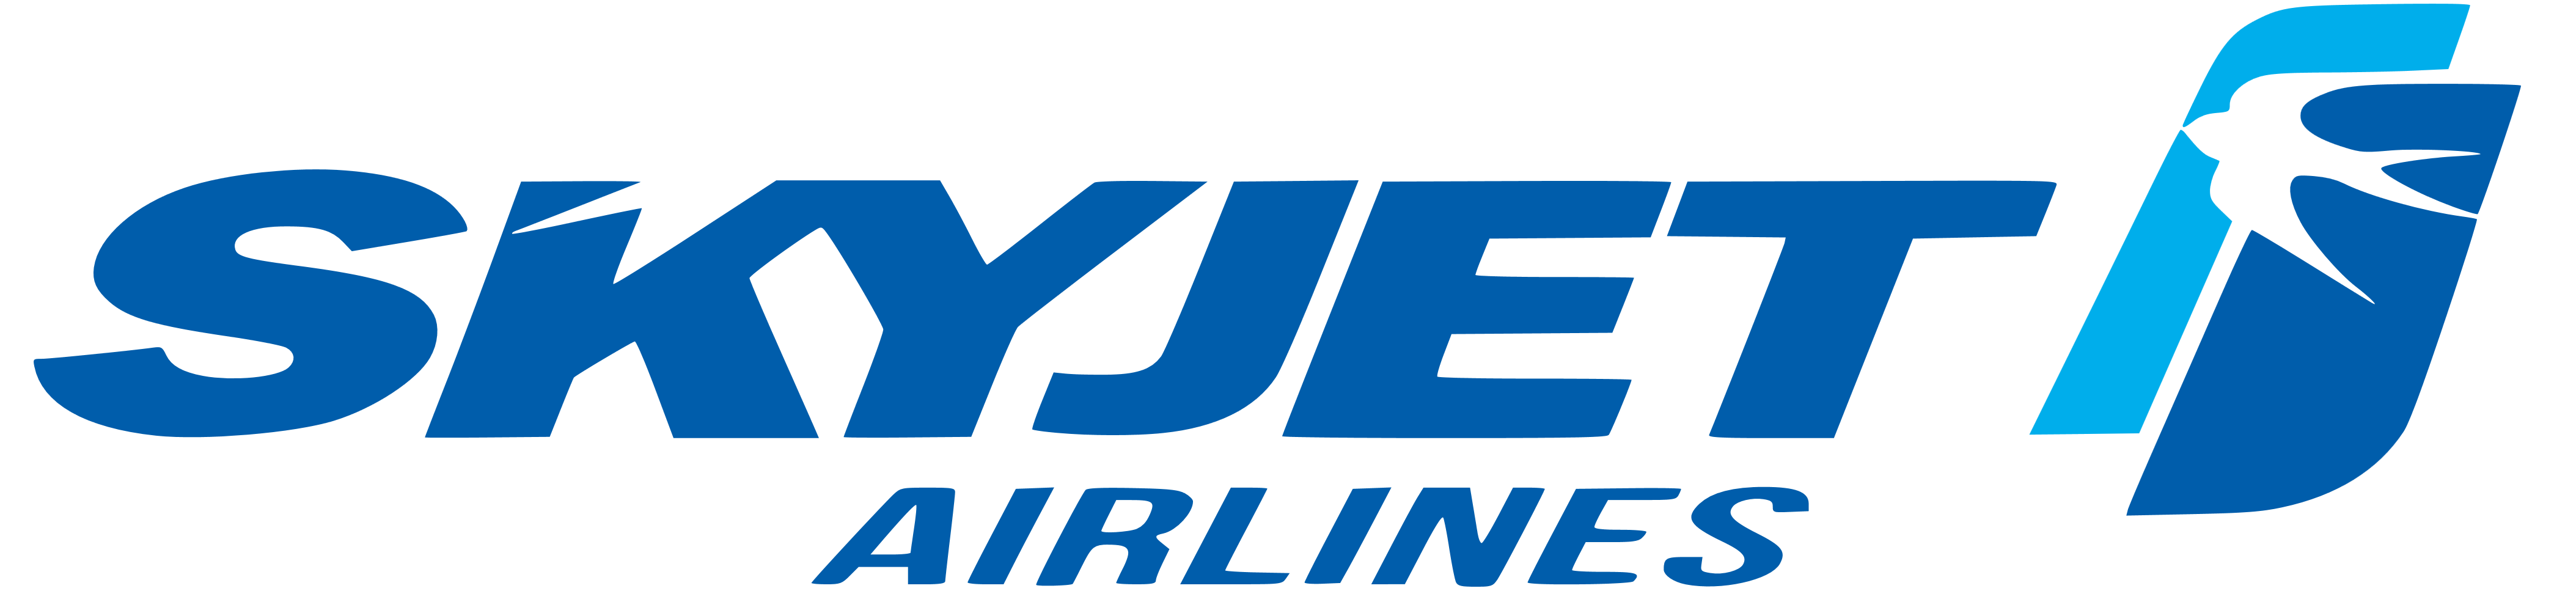 SkyJet Airlines – Logos Download